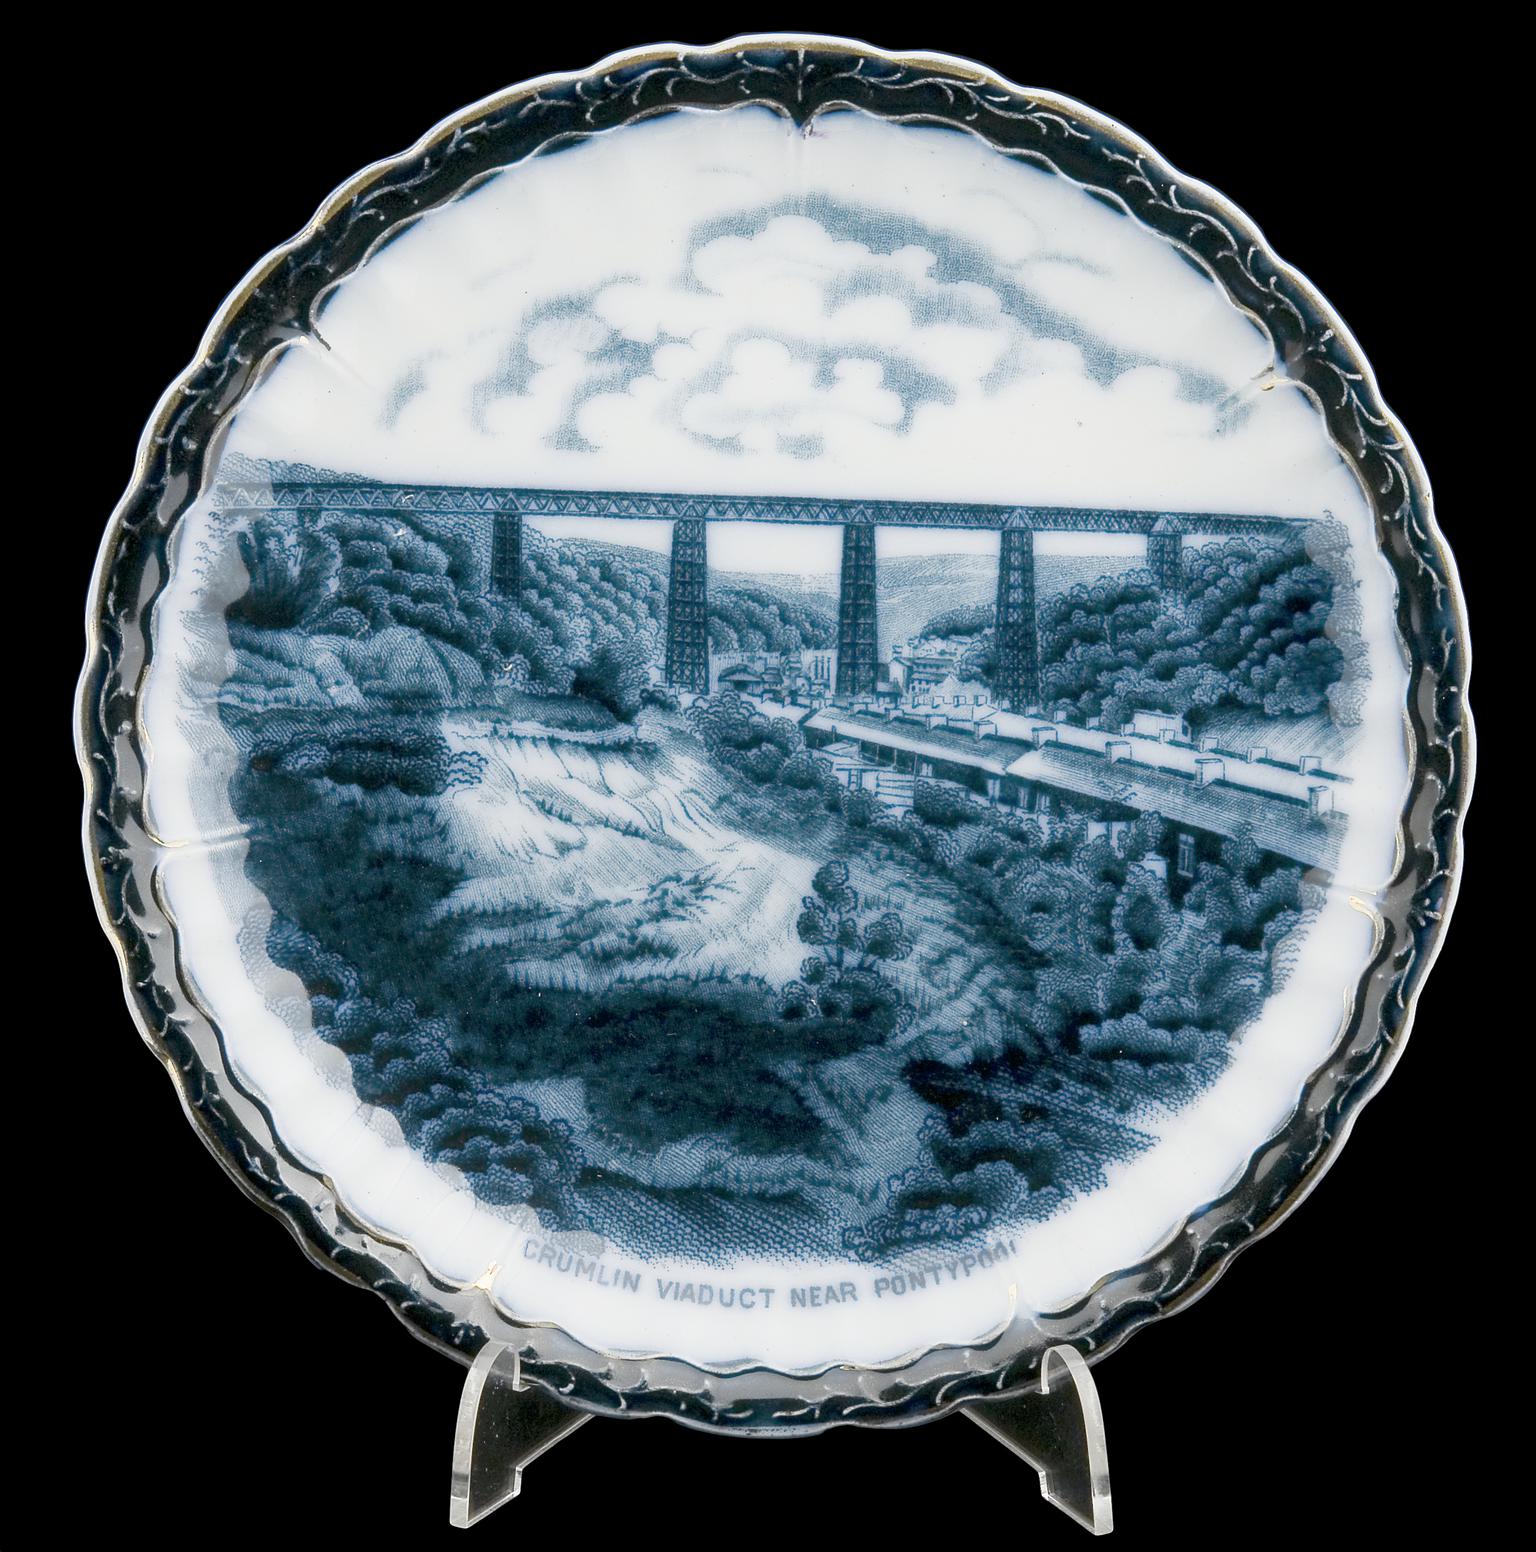 Crumlin Viaduct Near Pontypool (plate)